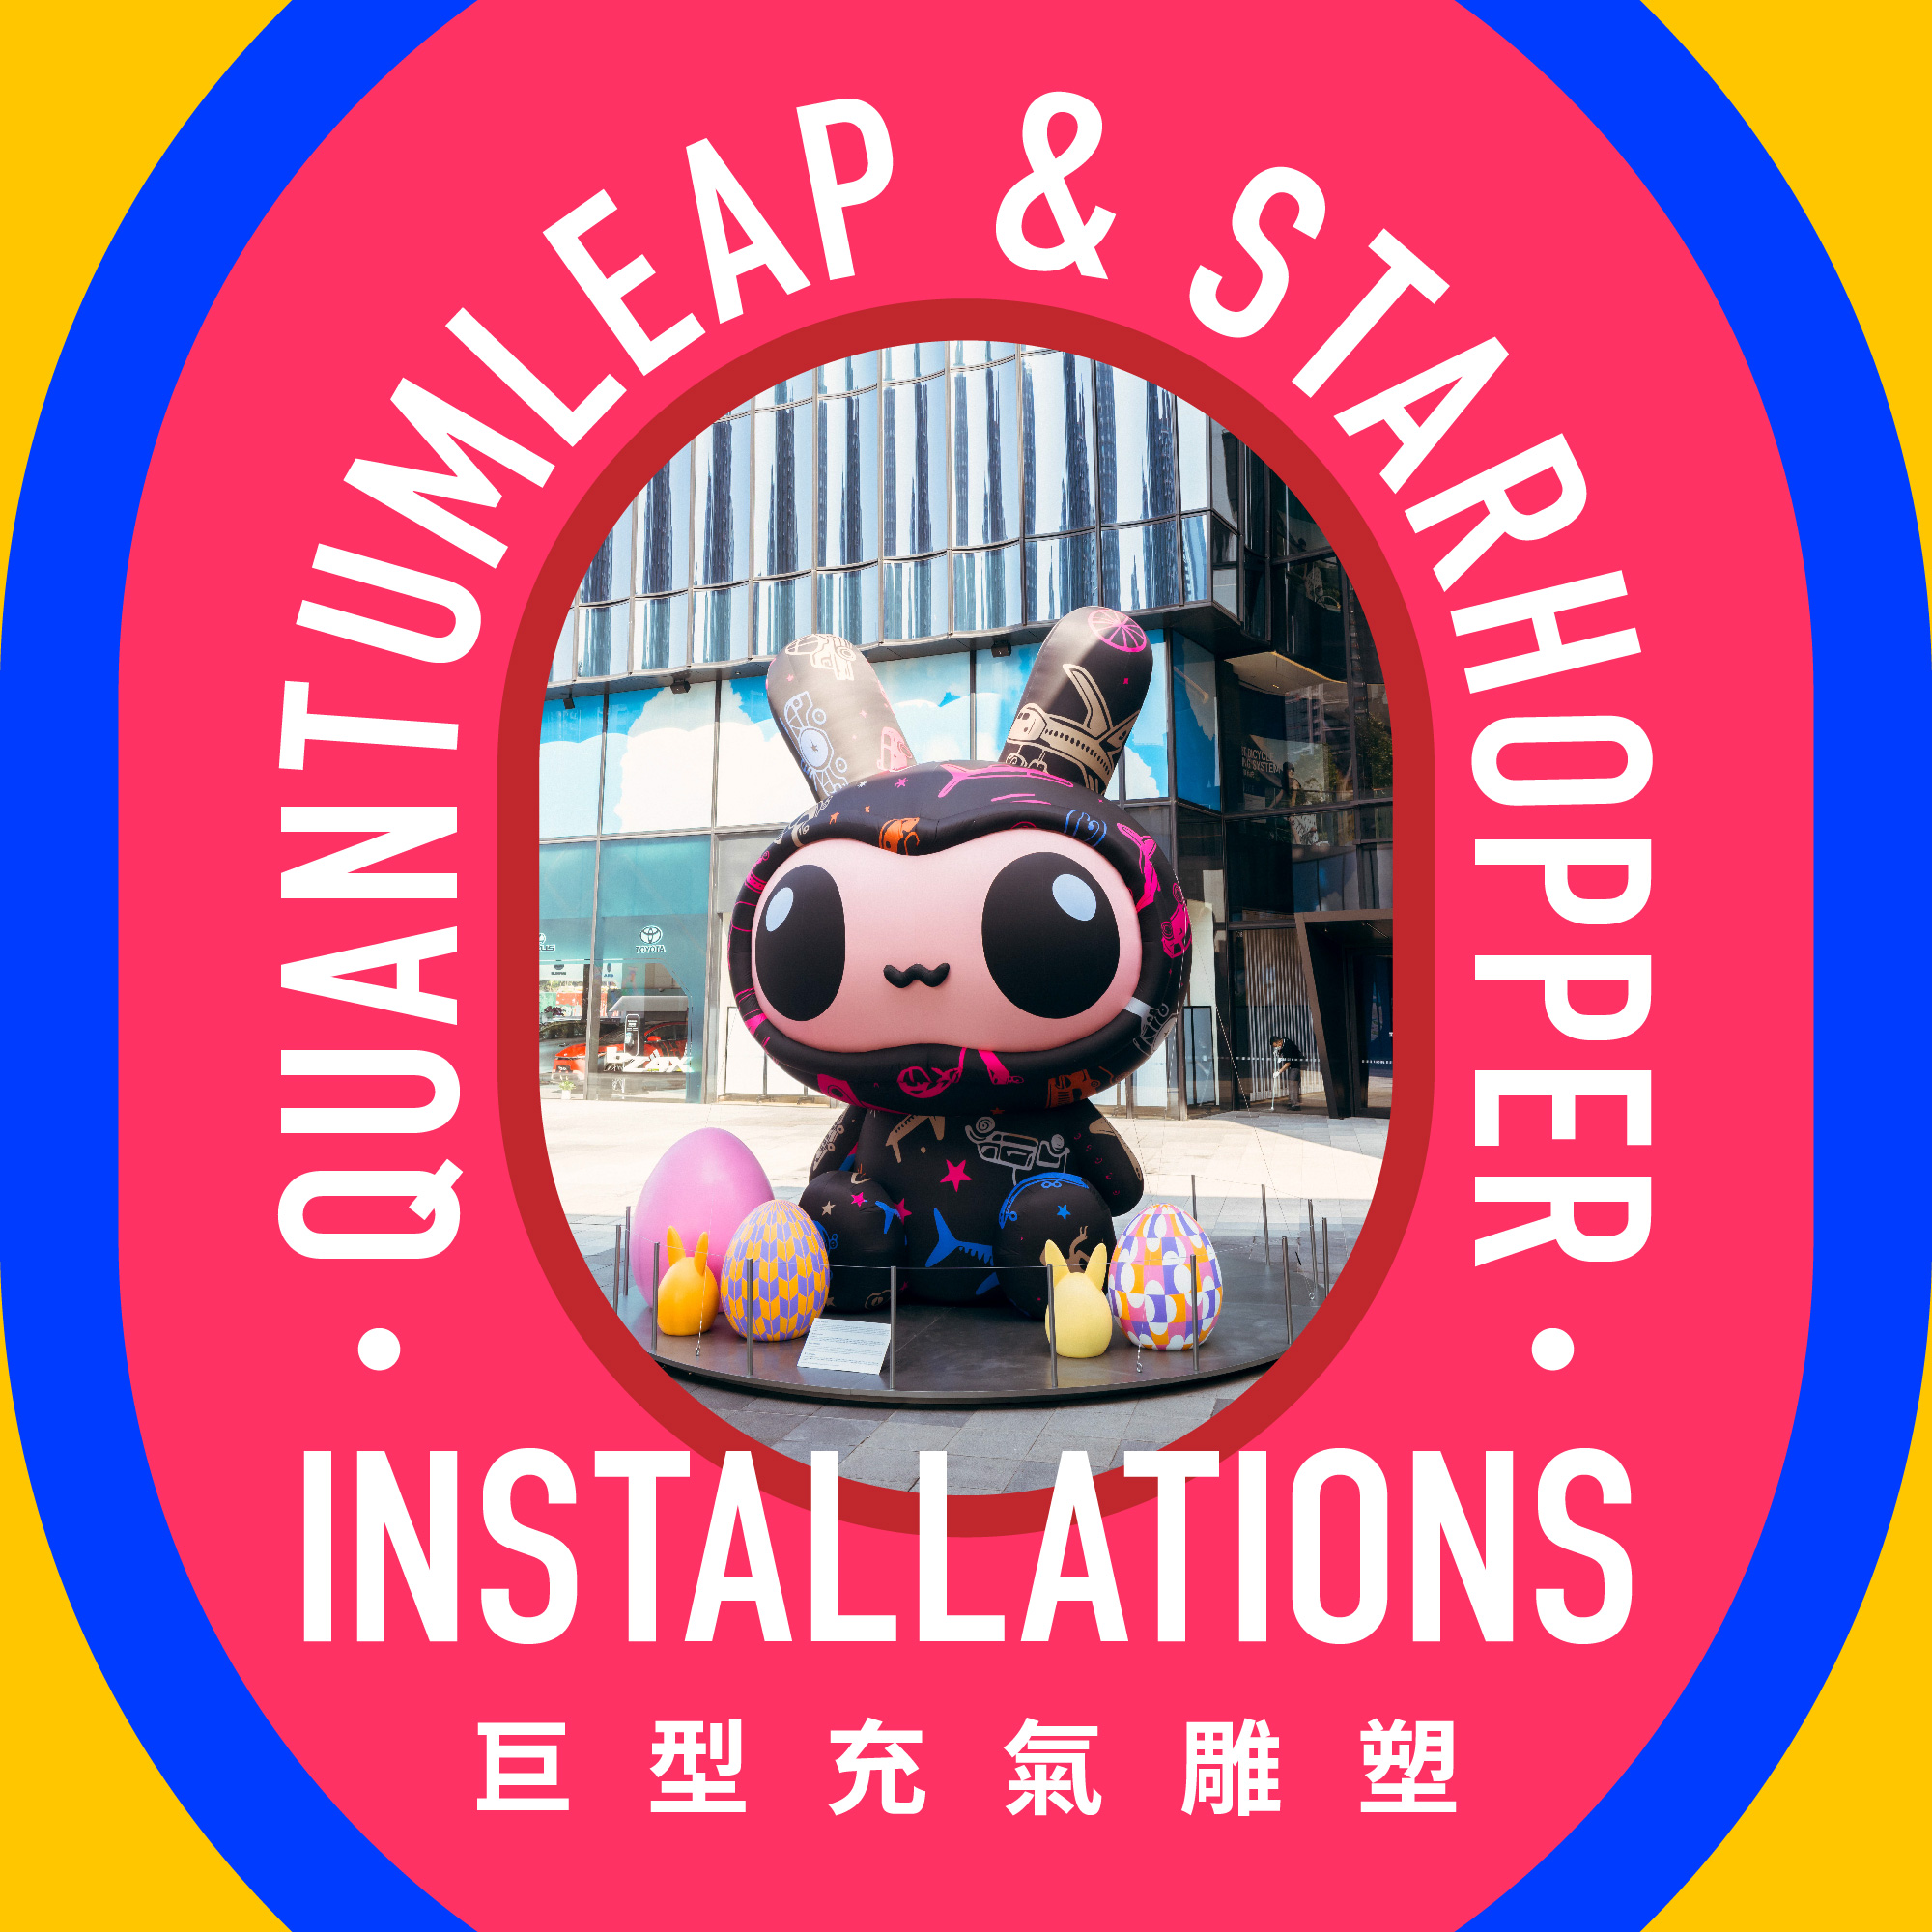 QuantumLeap ​& Starhopper ​Installations